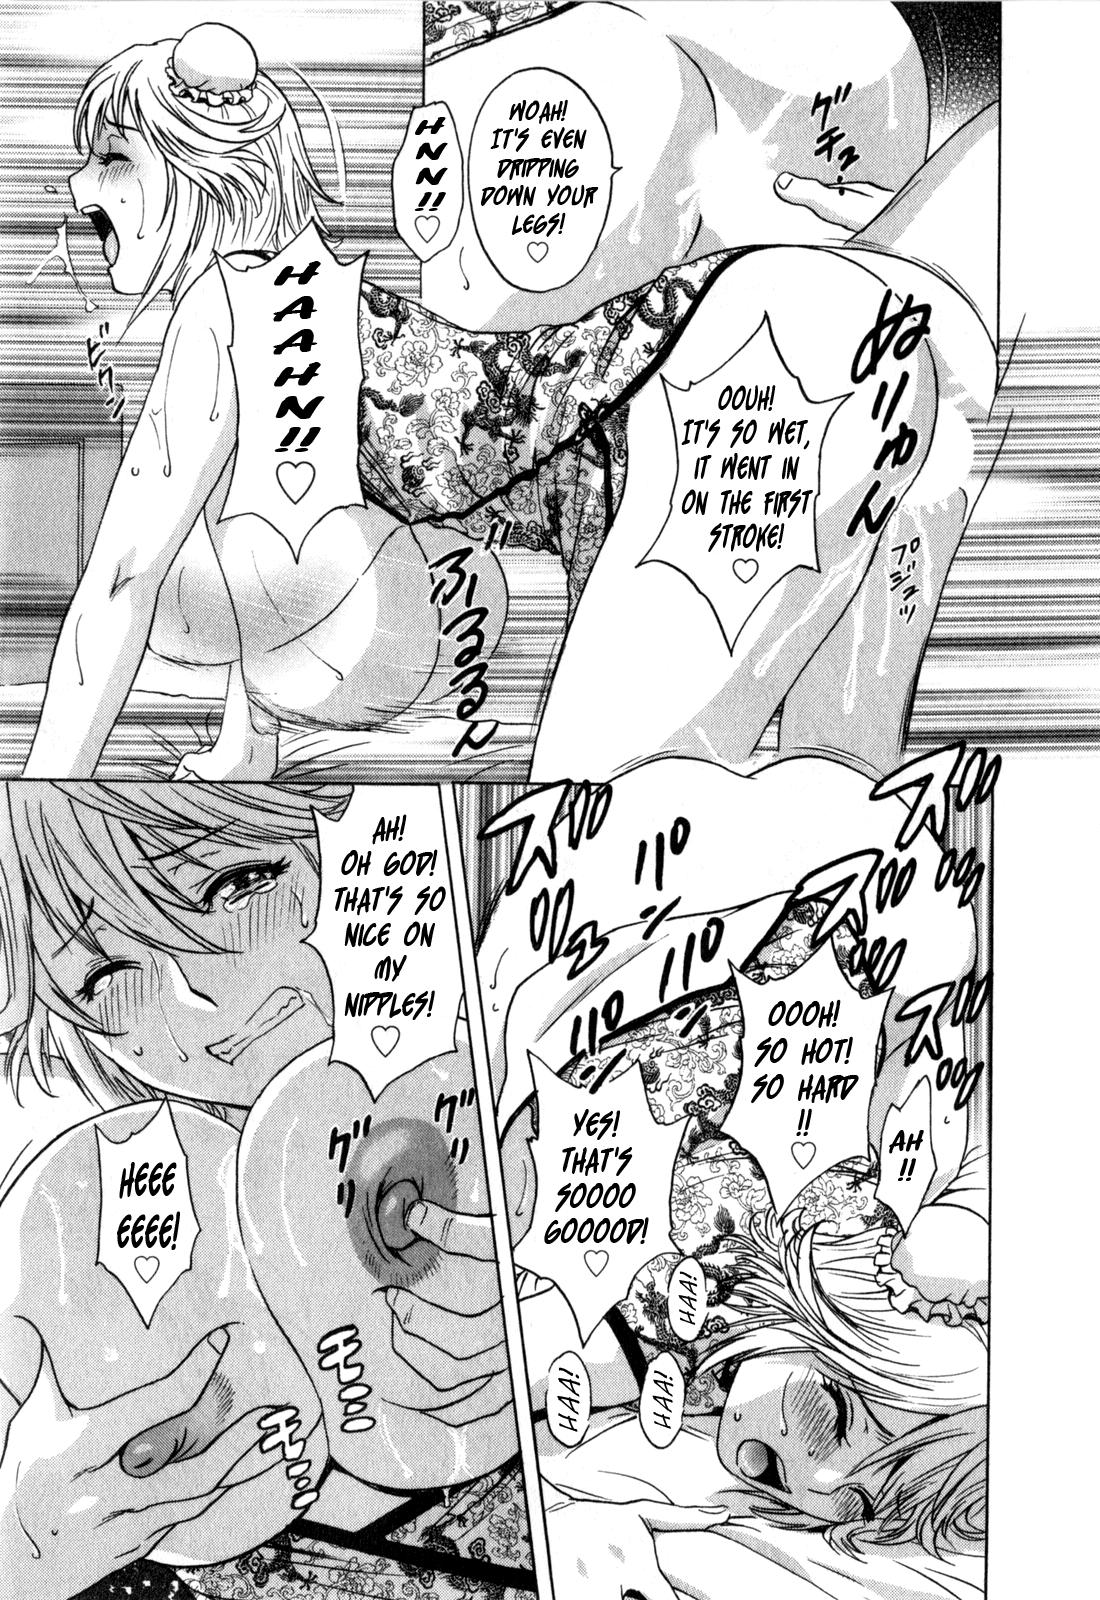 Life with Married Women Just Like a Manga 3 115